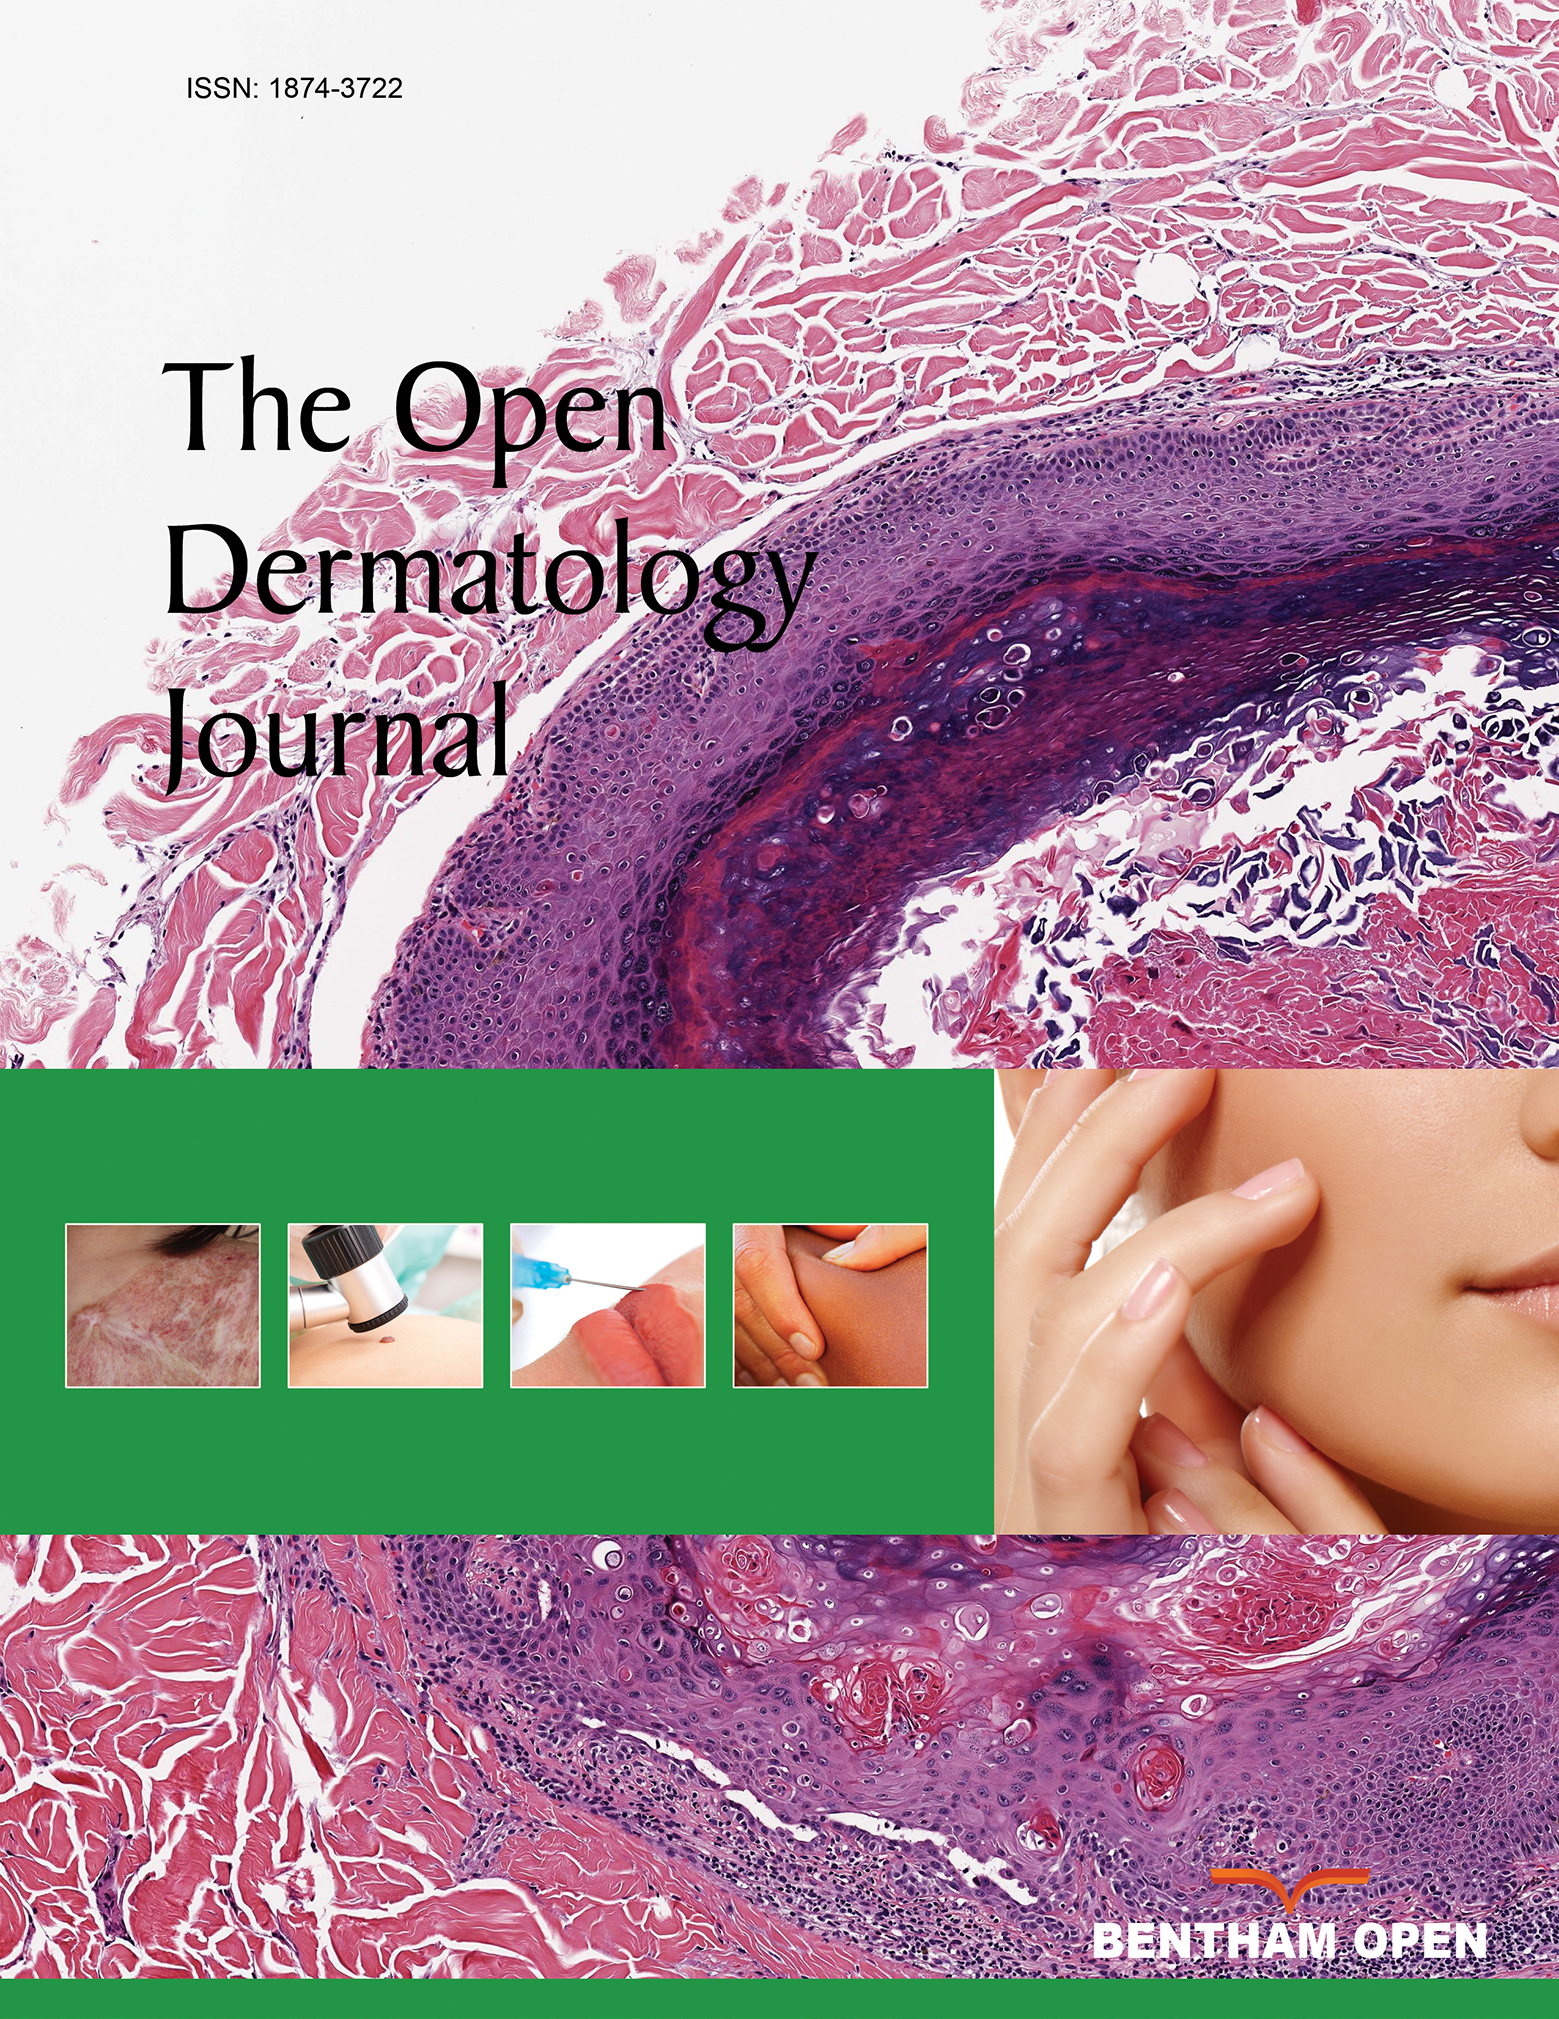 The Open Dermatology Journal